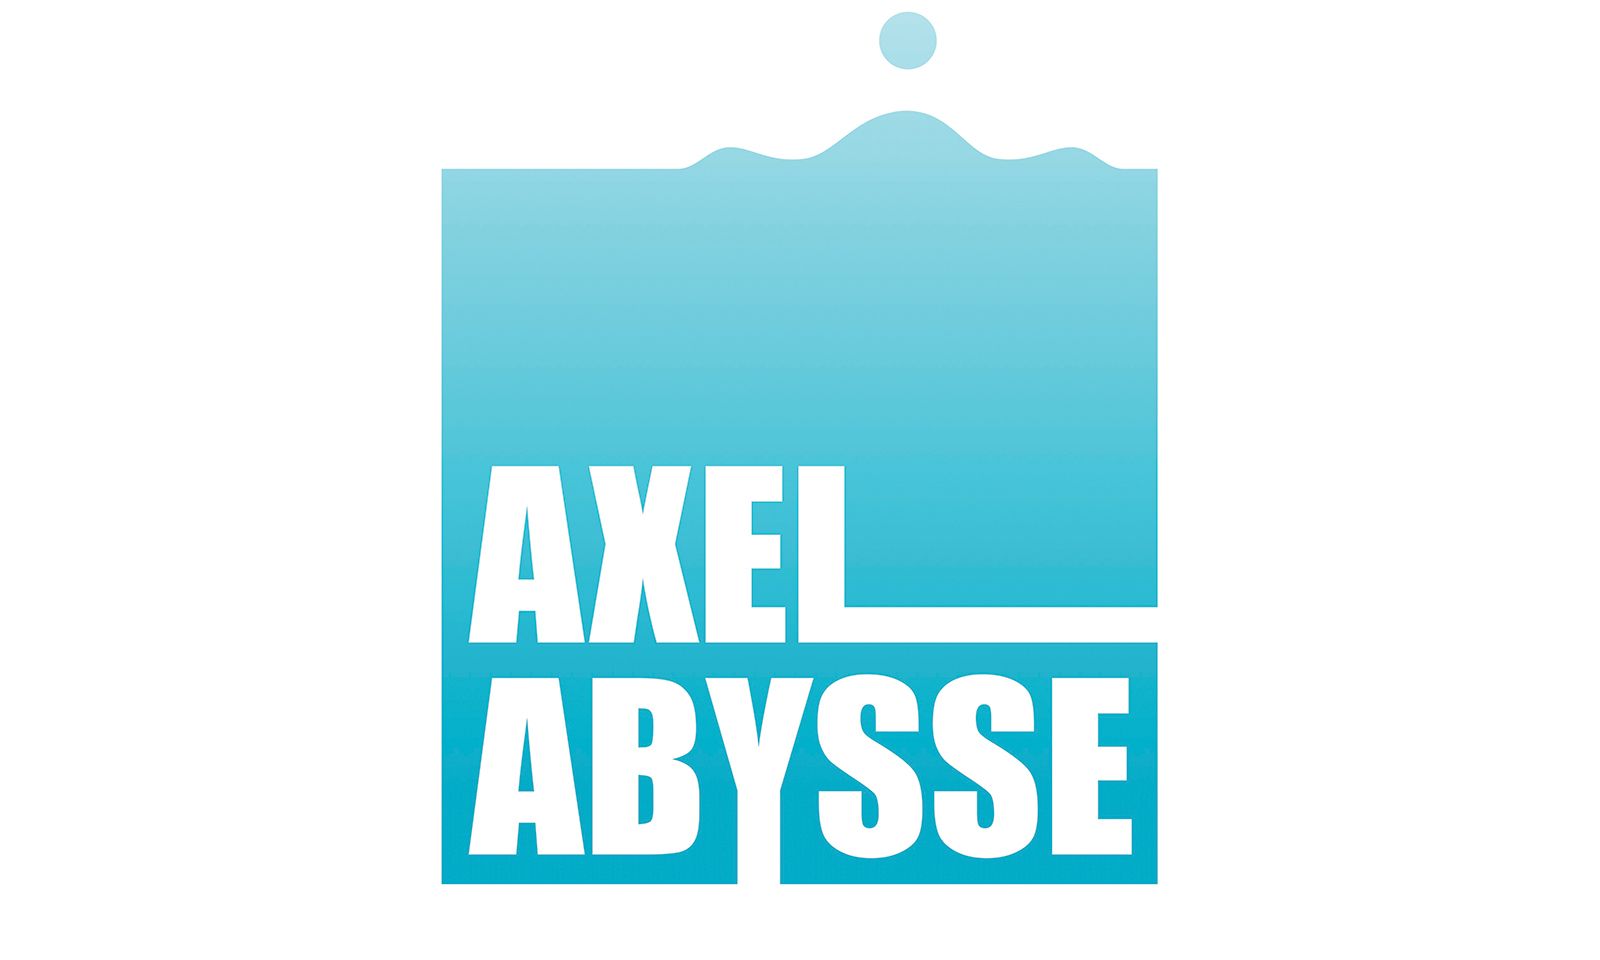 Zbuckz Program Adds AxelAbysse.com